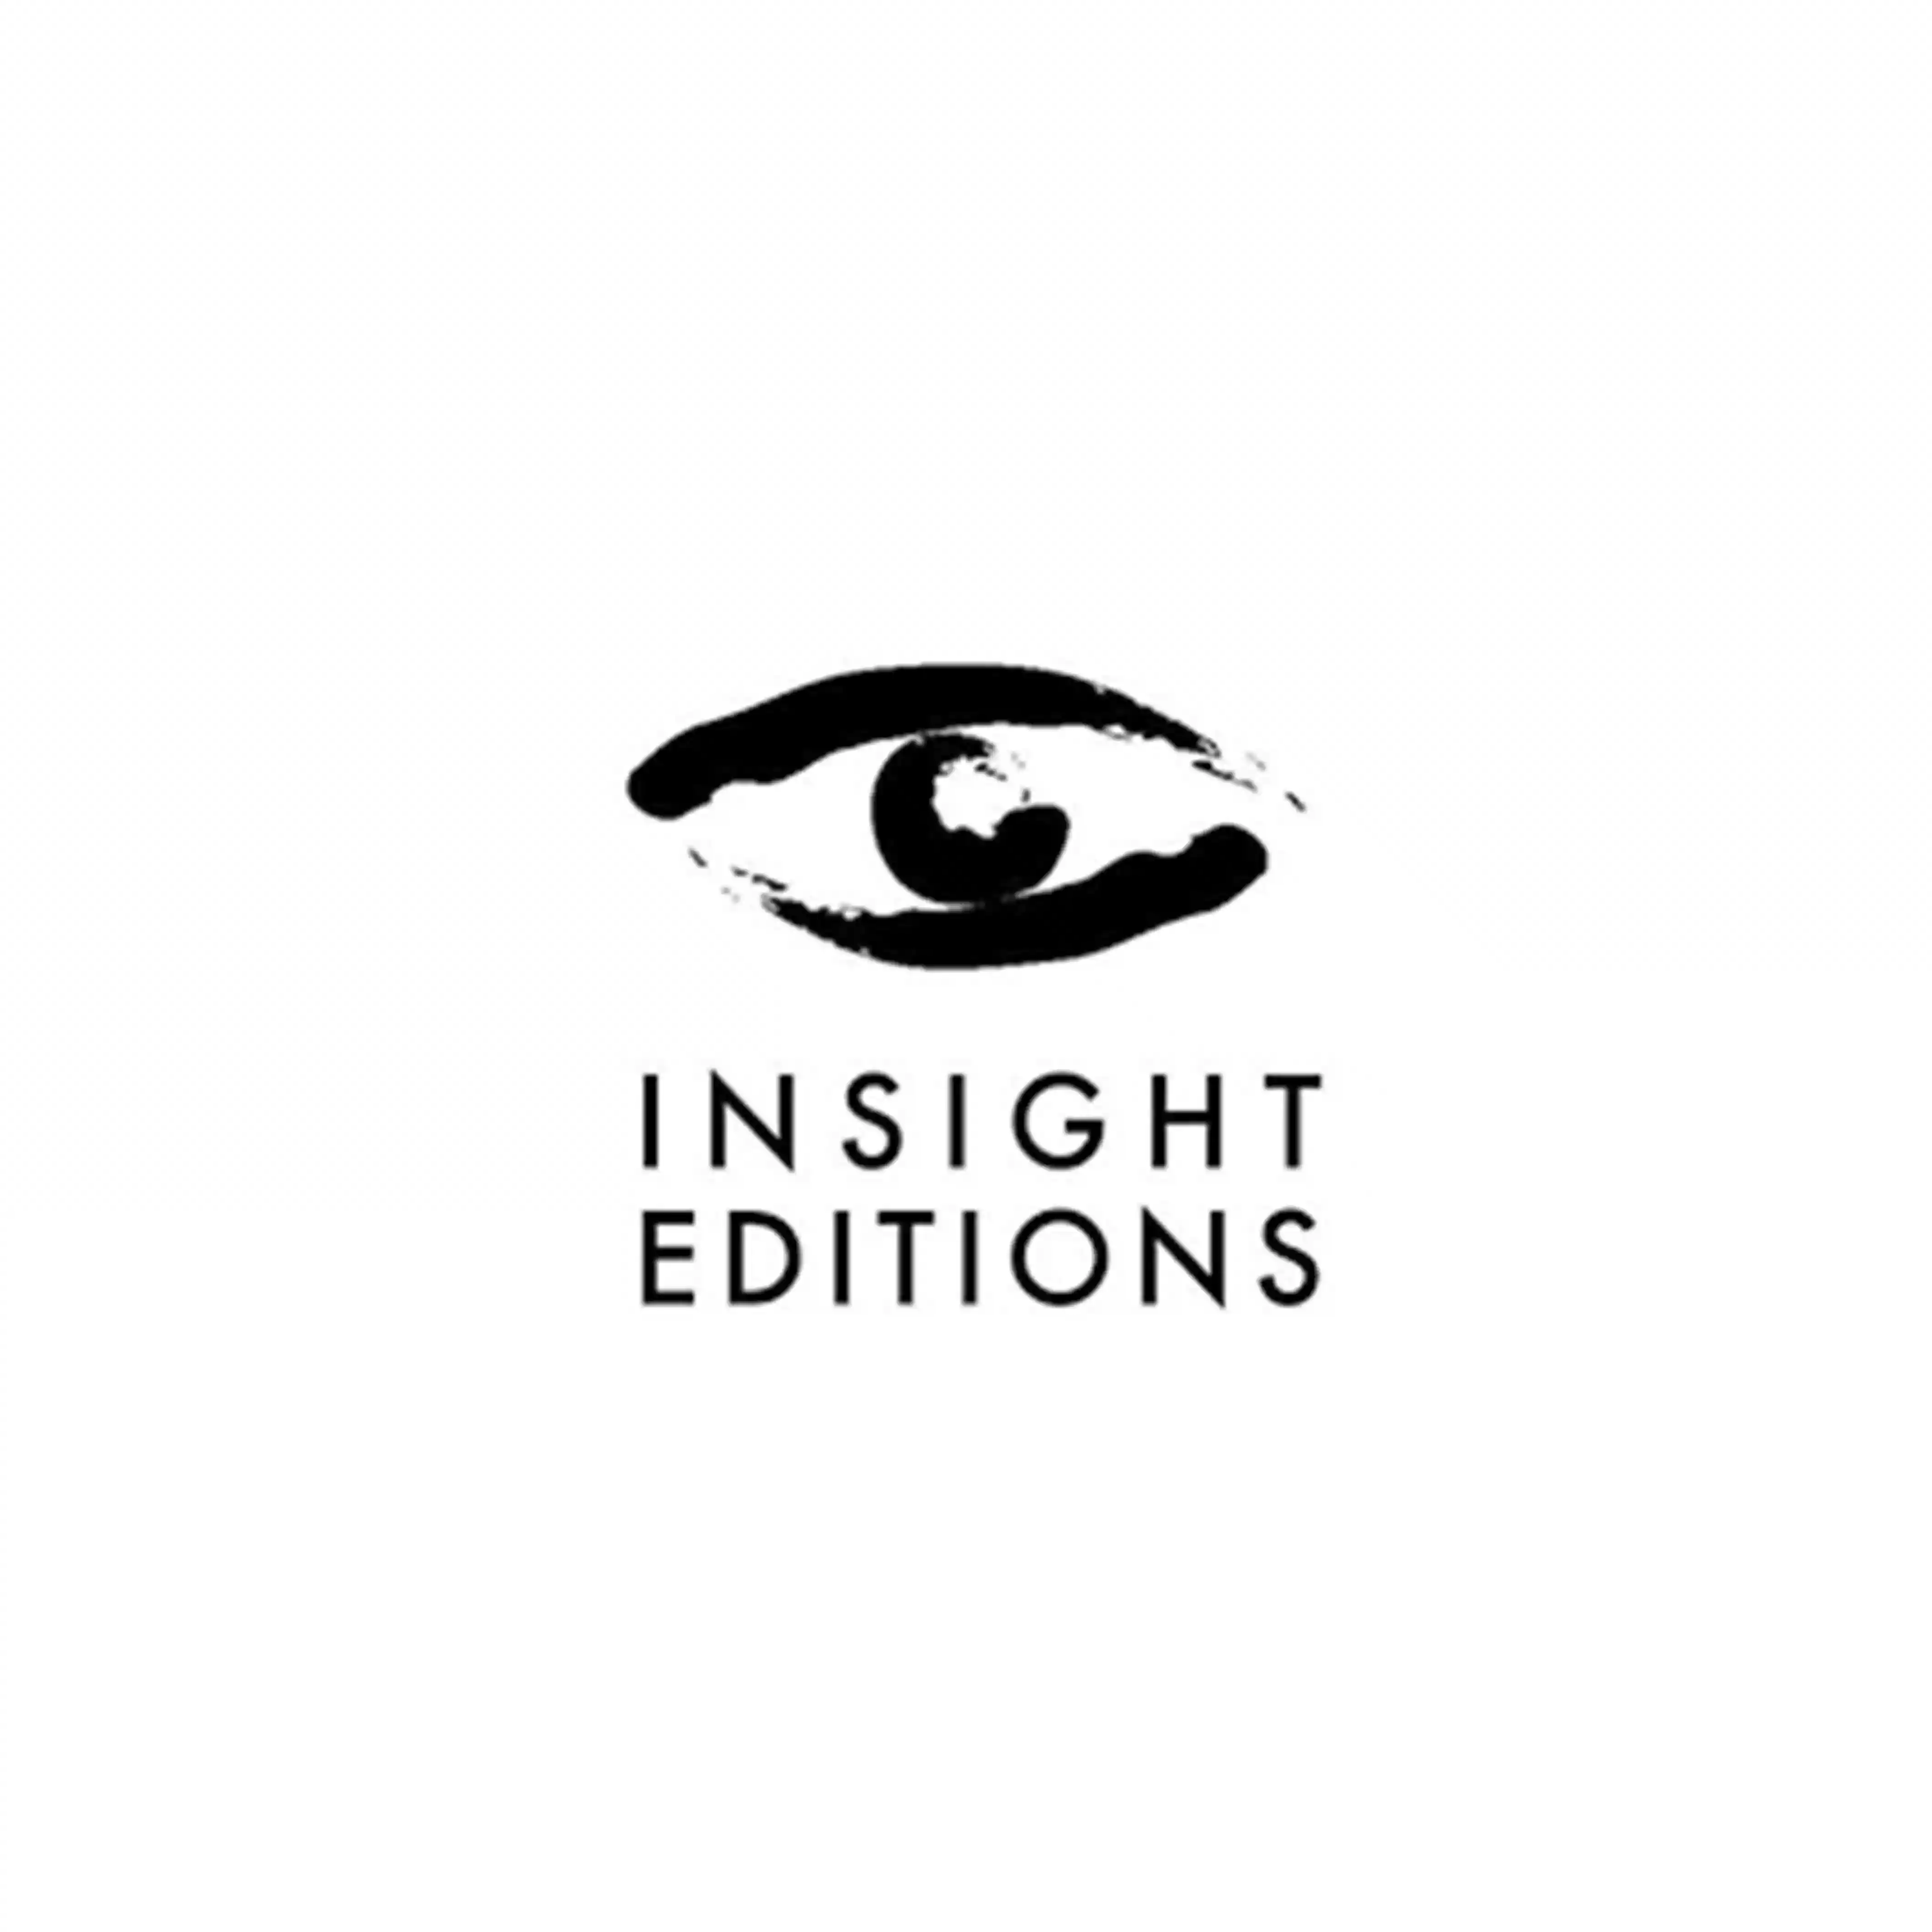 Insighteditions logo